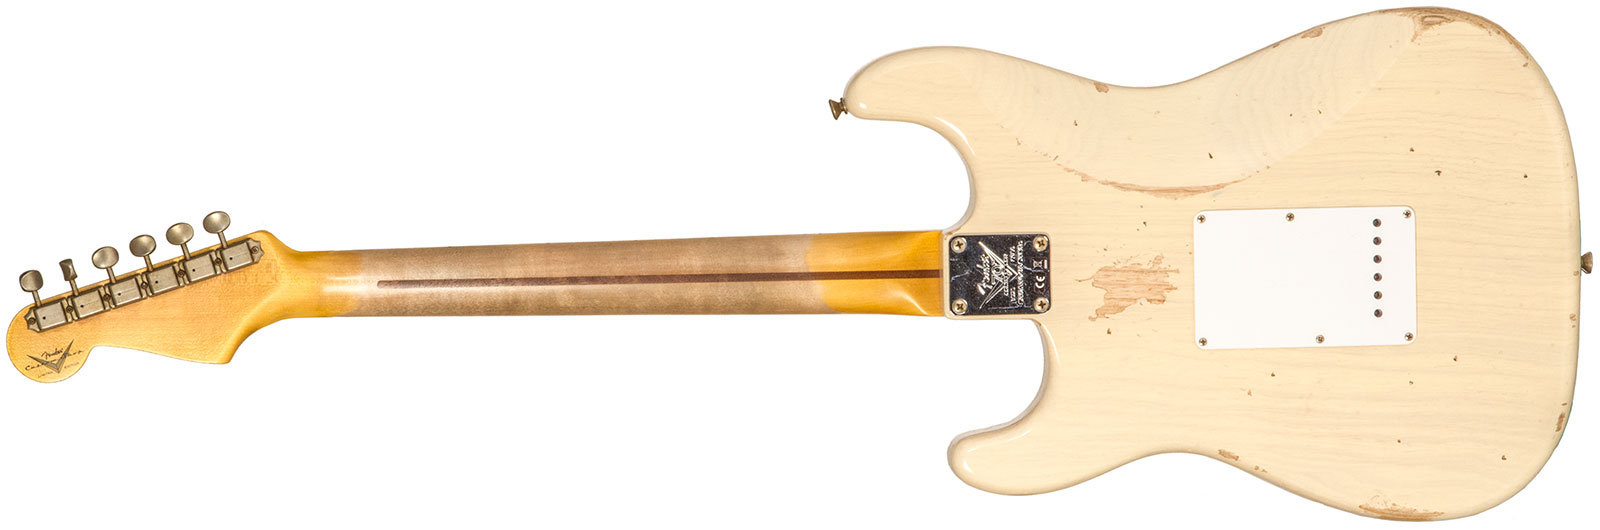 Fender Custom Shop Strat 1954 70th Anniv. 3s Trem Mn #xn4342 - Relic Vintage Blonde - E-Gitarre in Str-Form - Variation 1